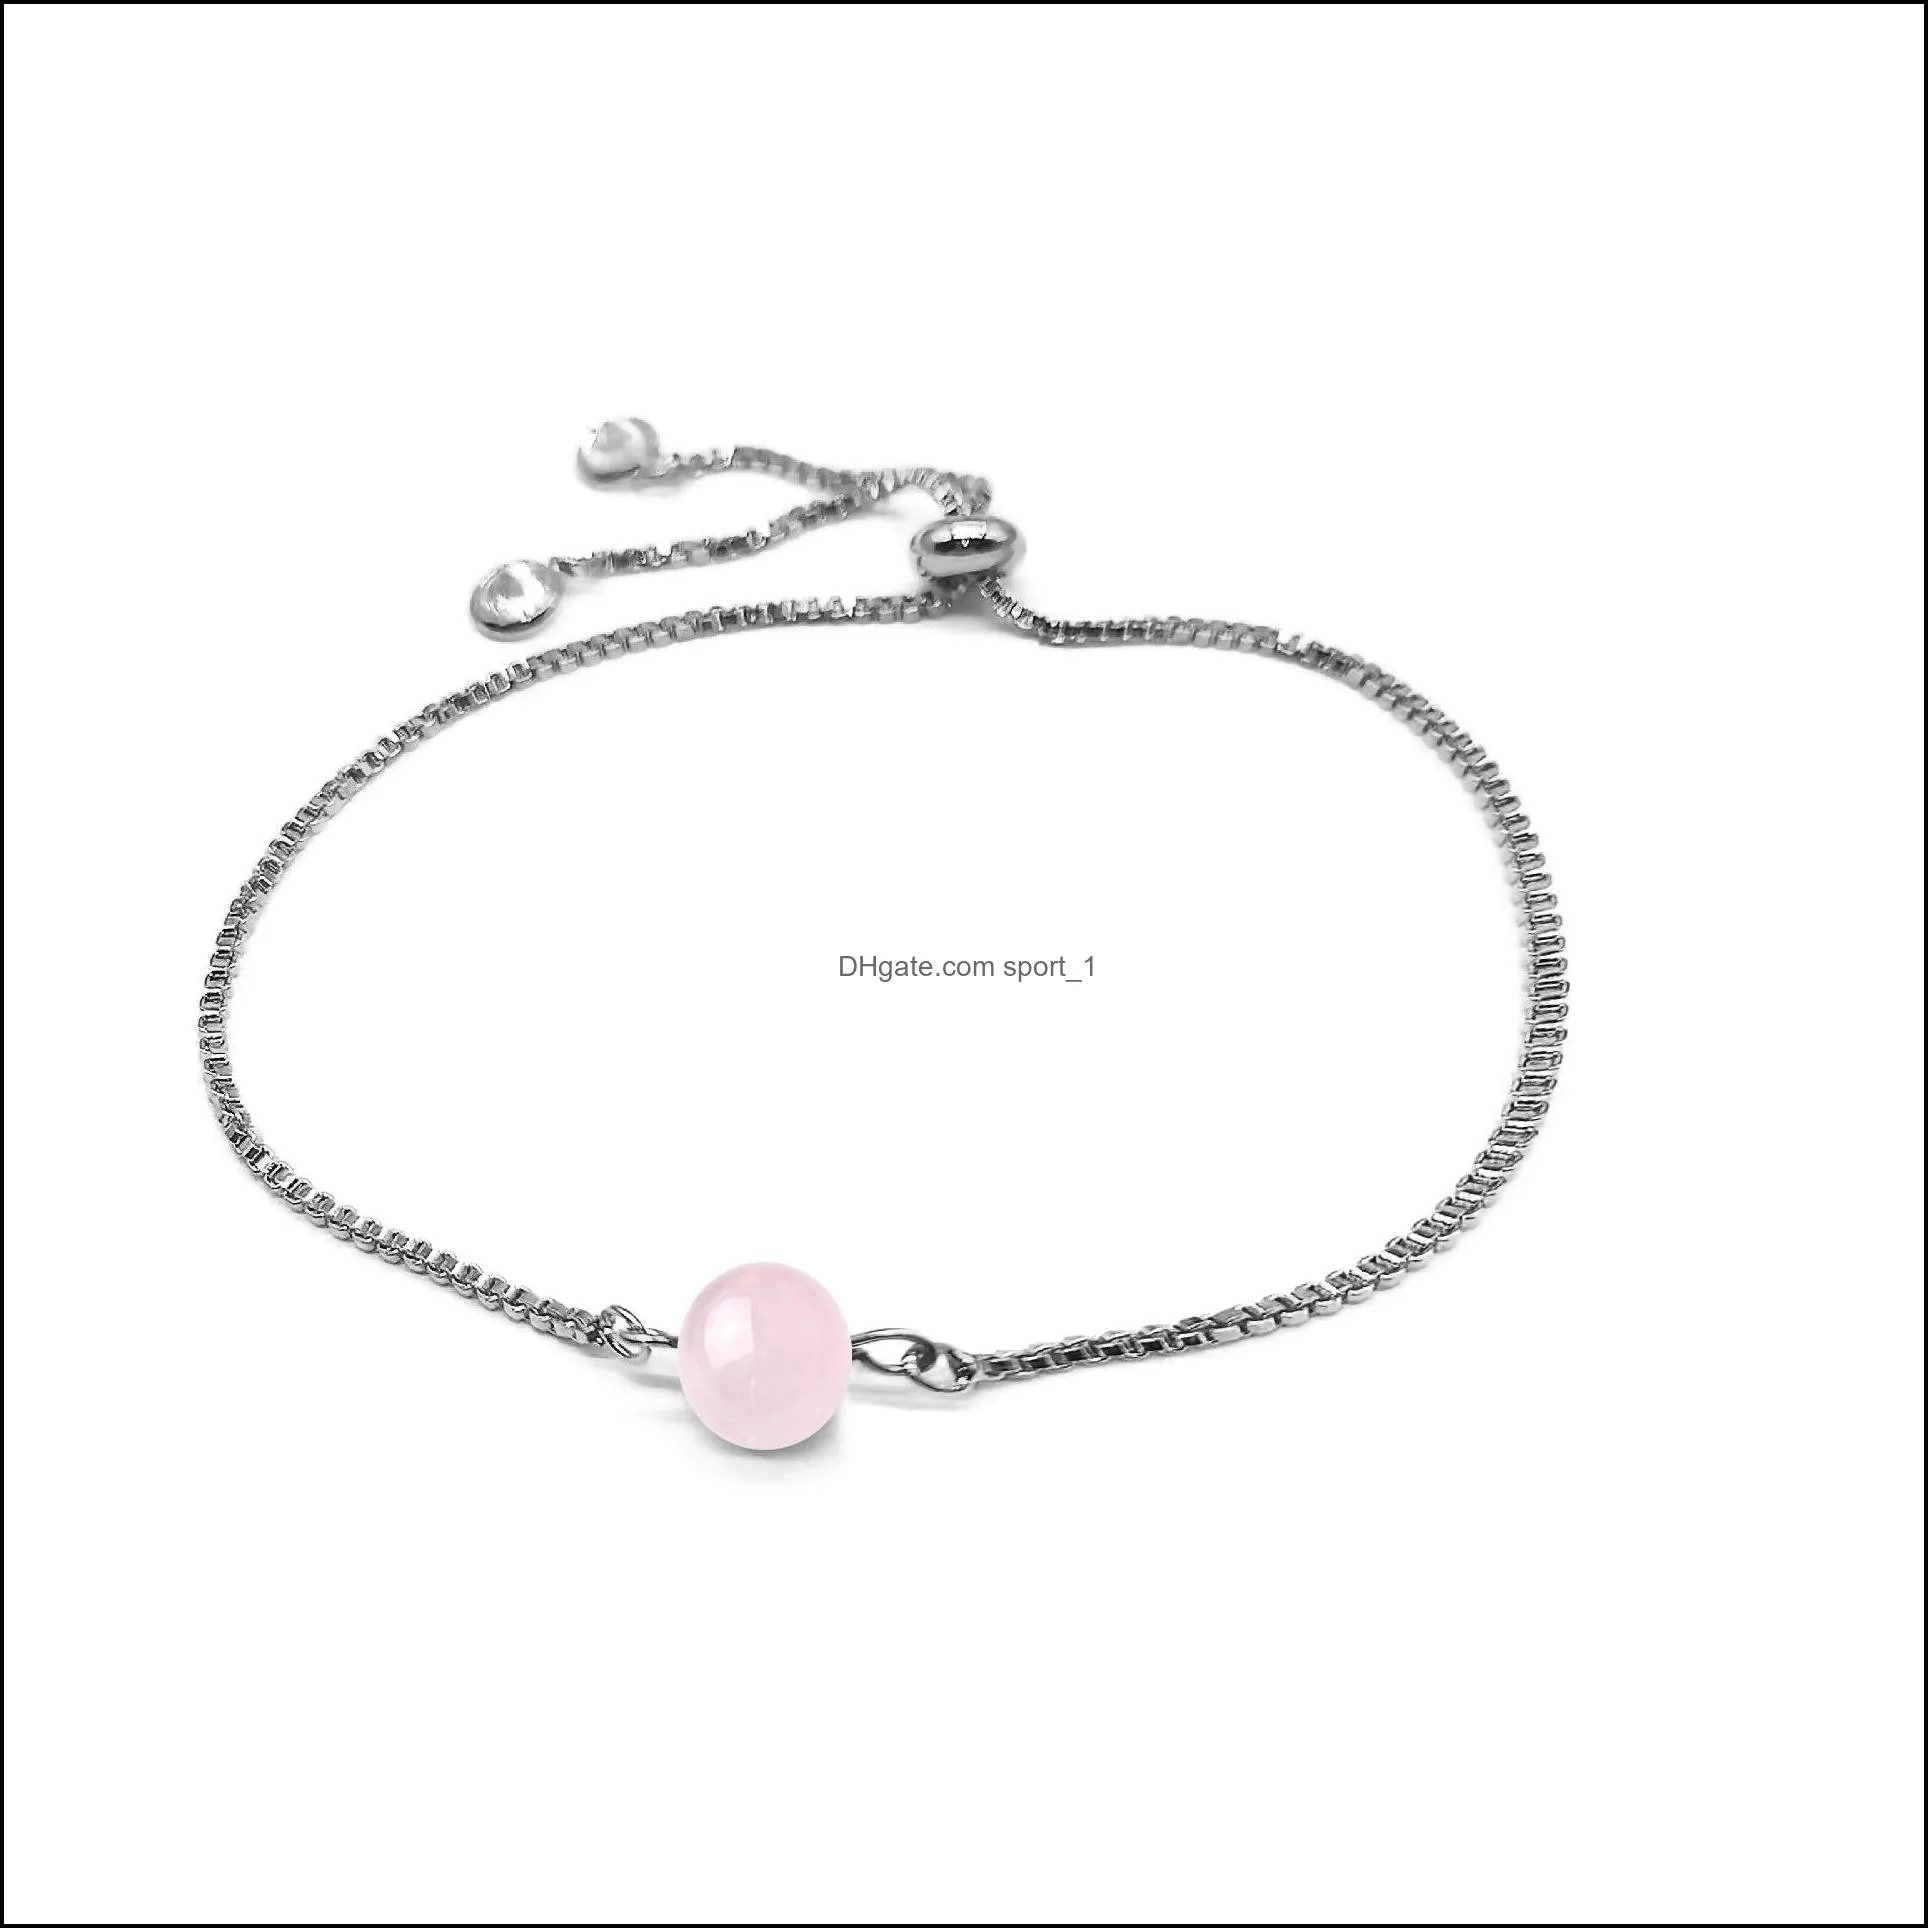 healing crystal tenns bracelet wristbands 8mm stone beads chakra gemstone cuff bangle anklet jewelry adjustable for men women teen